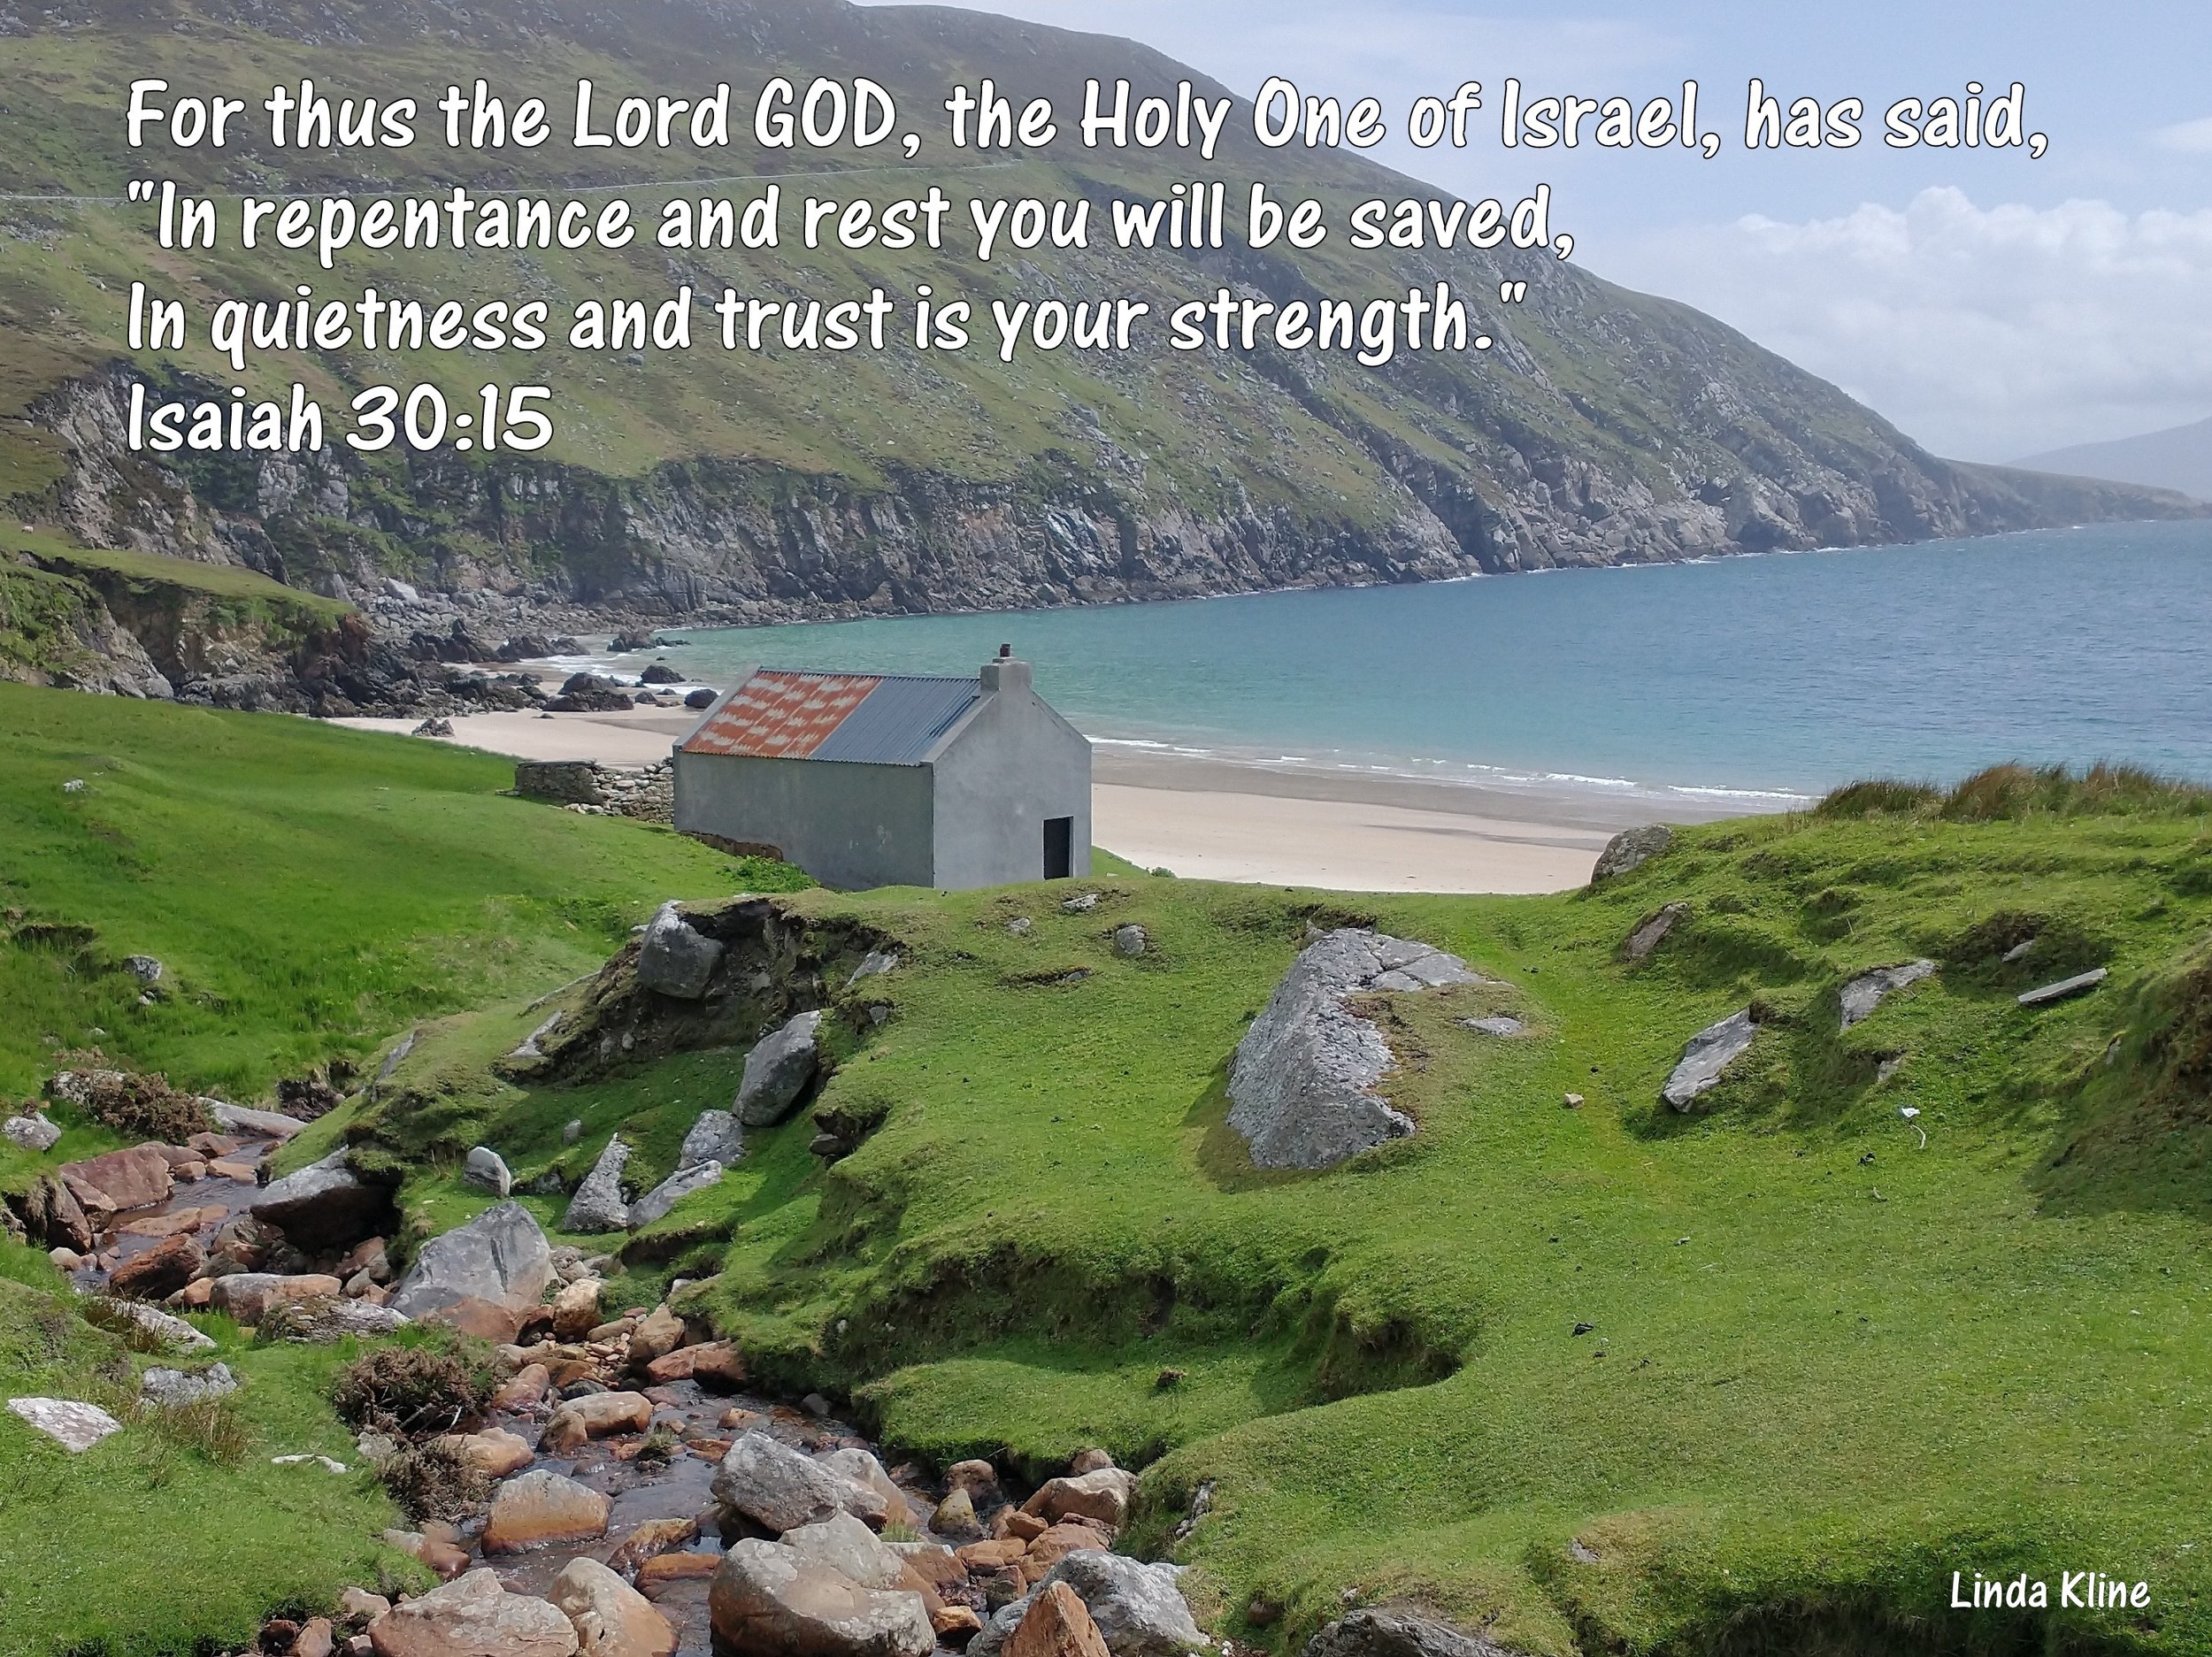 Ireland Achill Island quietness.jpg